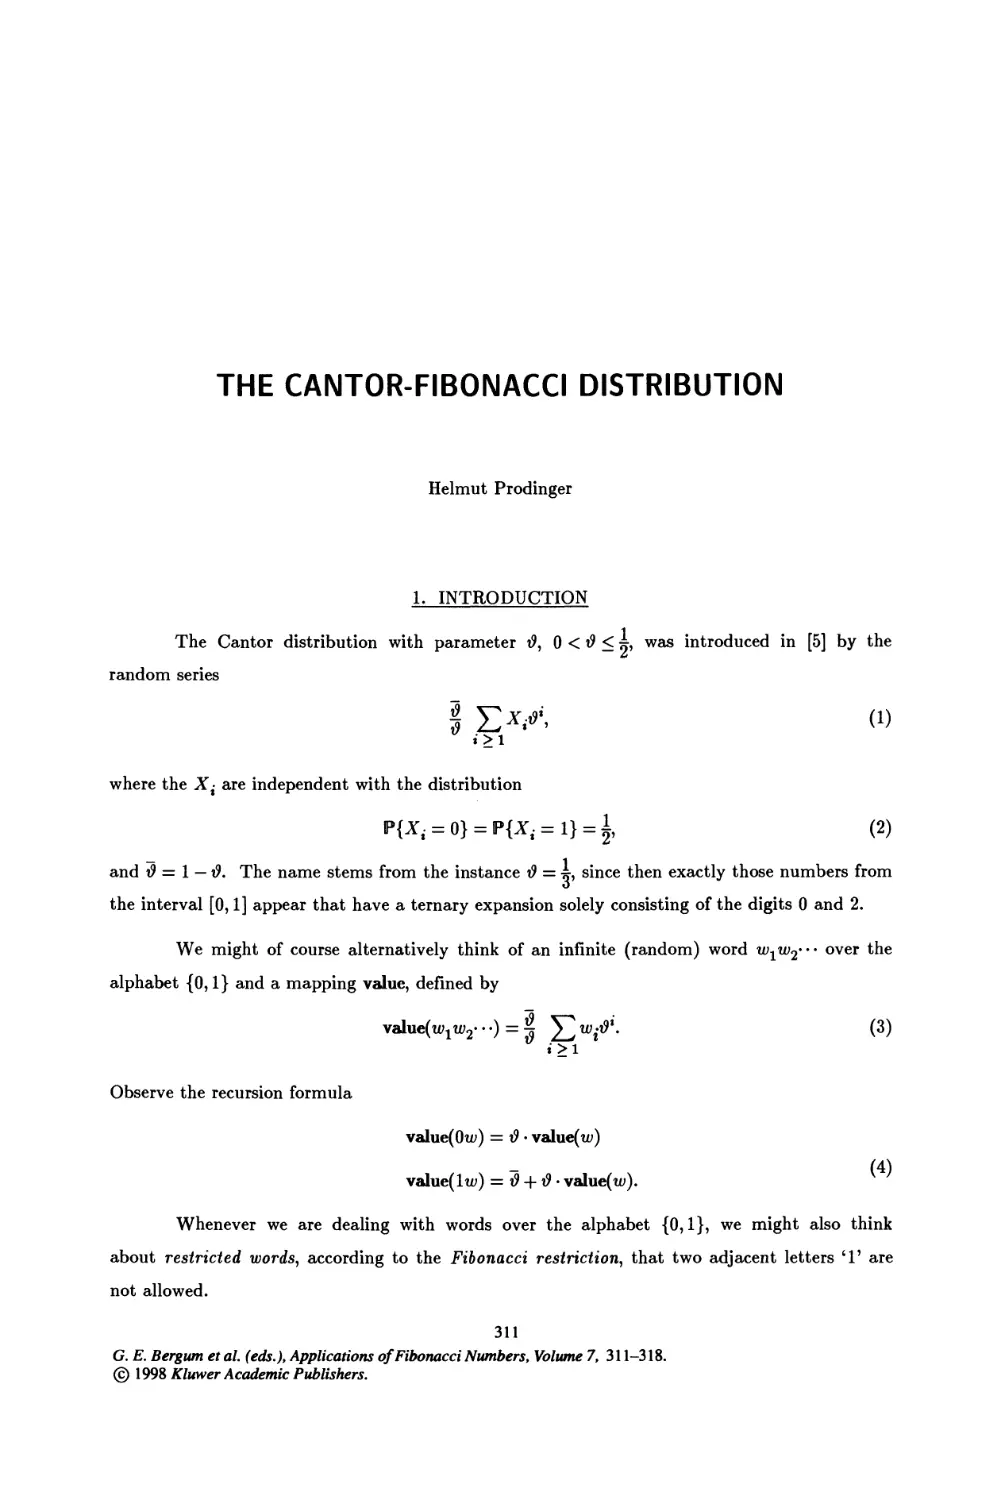 35. The Cantor-Fibonacci Distribution